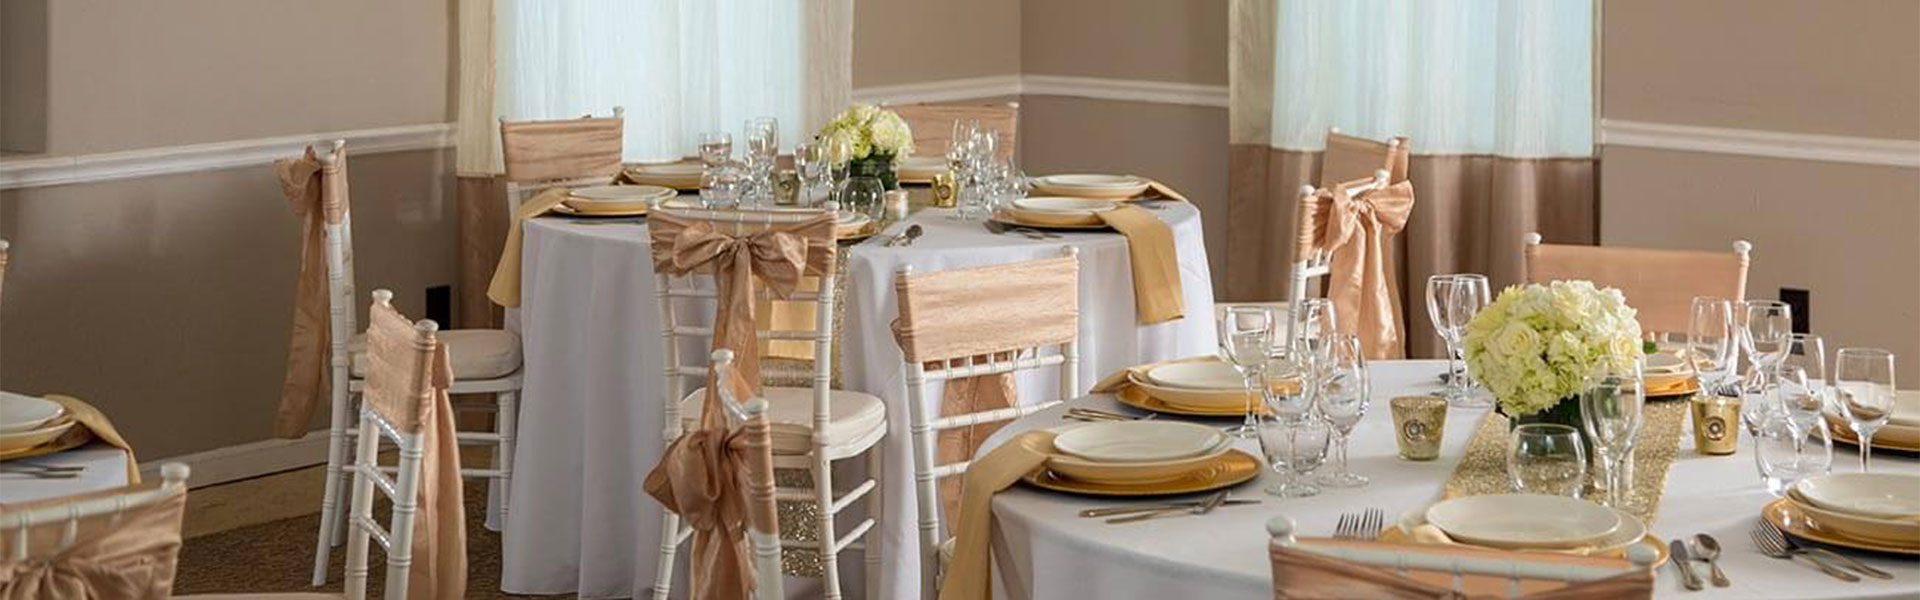 Idaho Wedding Venue - tables set up for weddings.